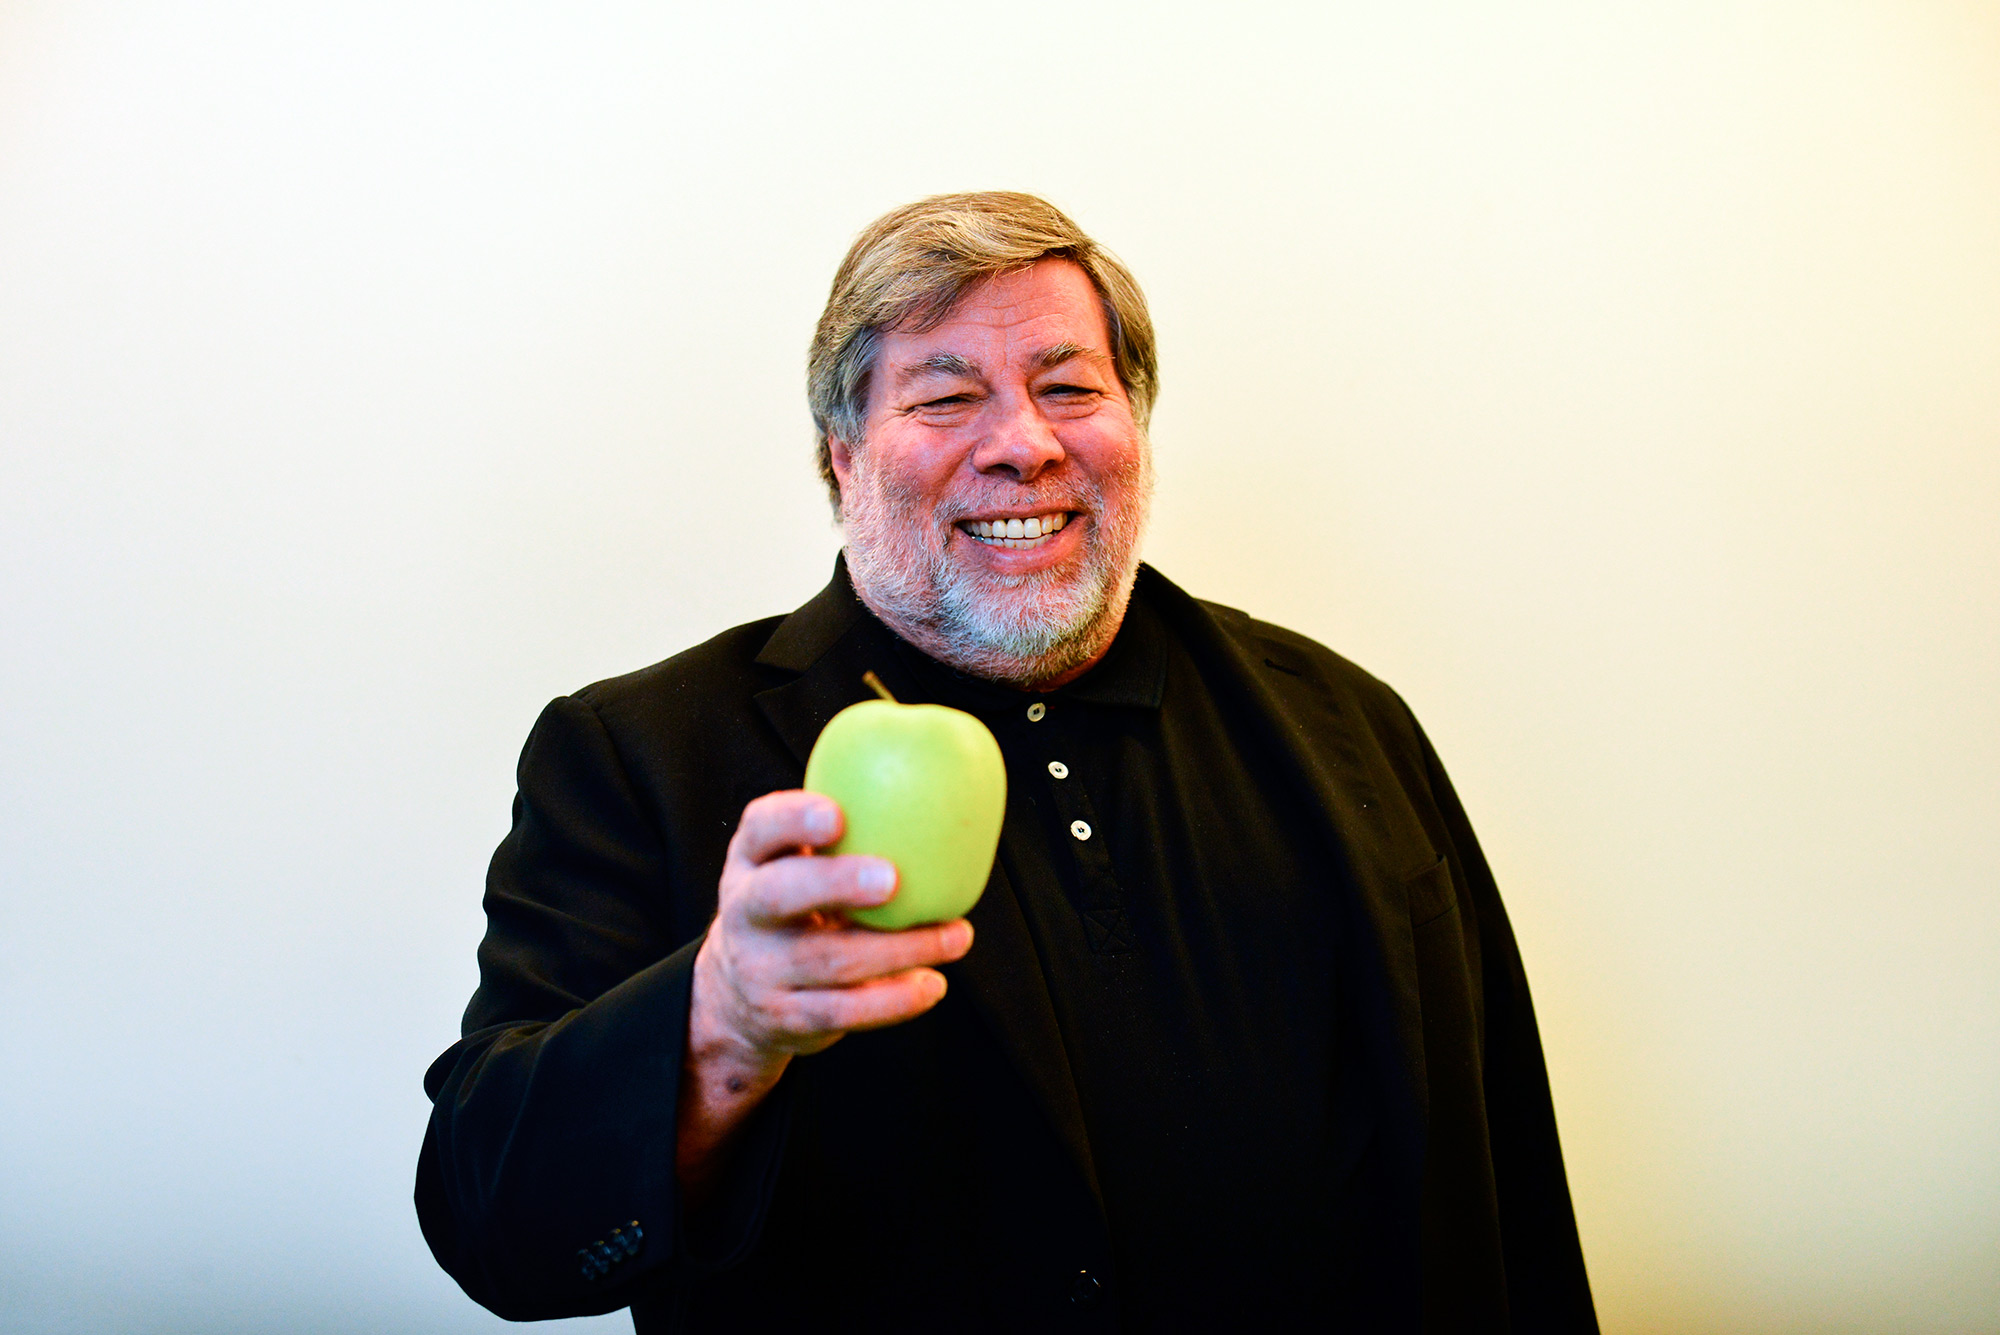 Steve Wozniak to Receive Wax Statue at Madame Tussauds in San Francisco